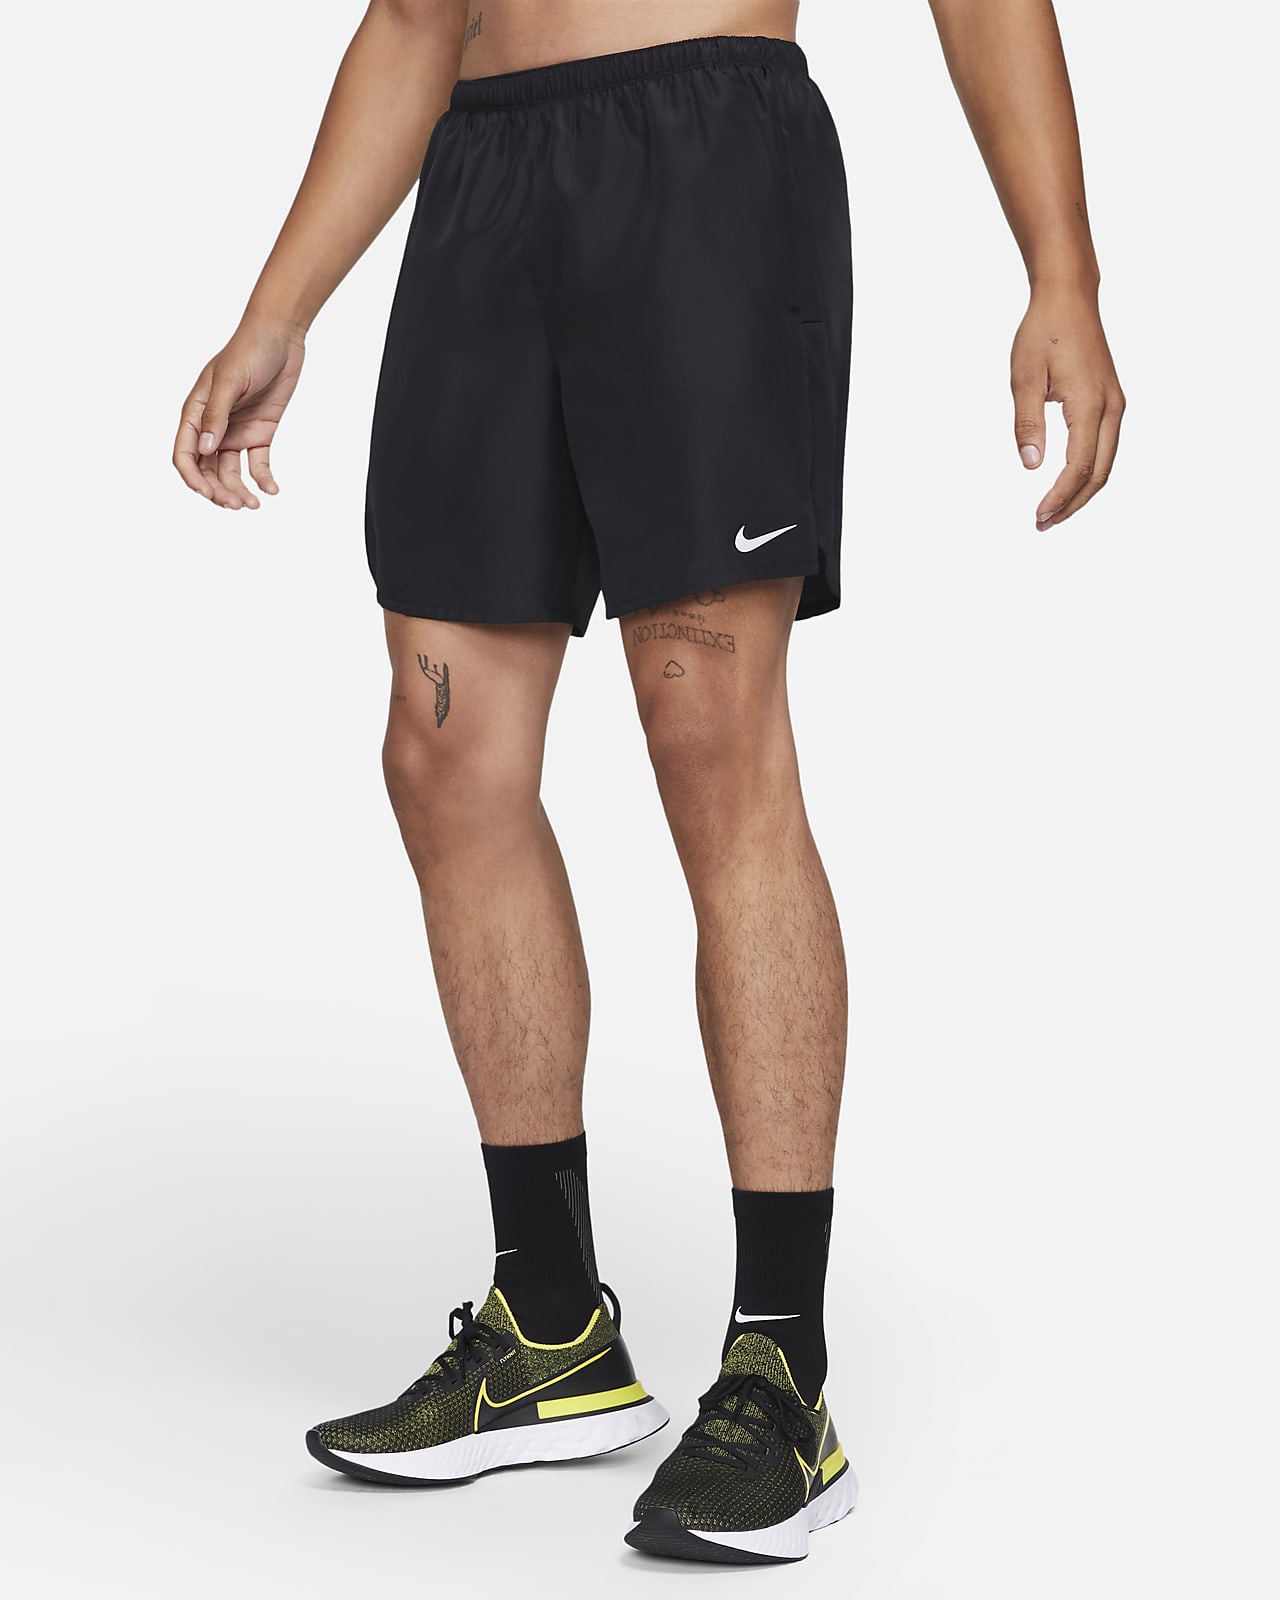 Nike Challenger Men's BriefLined Running Shorts.